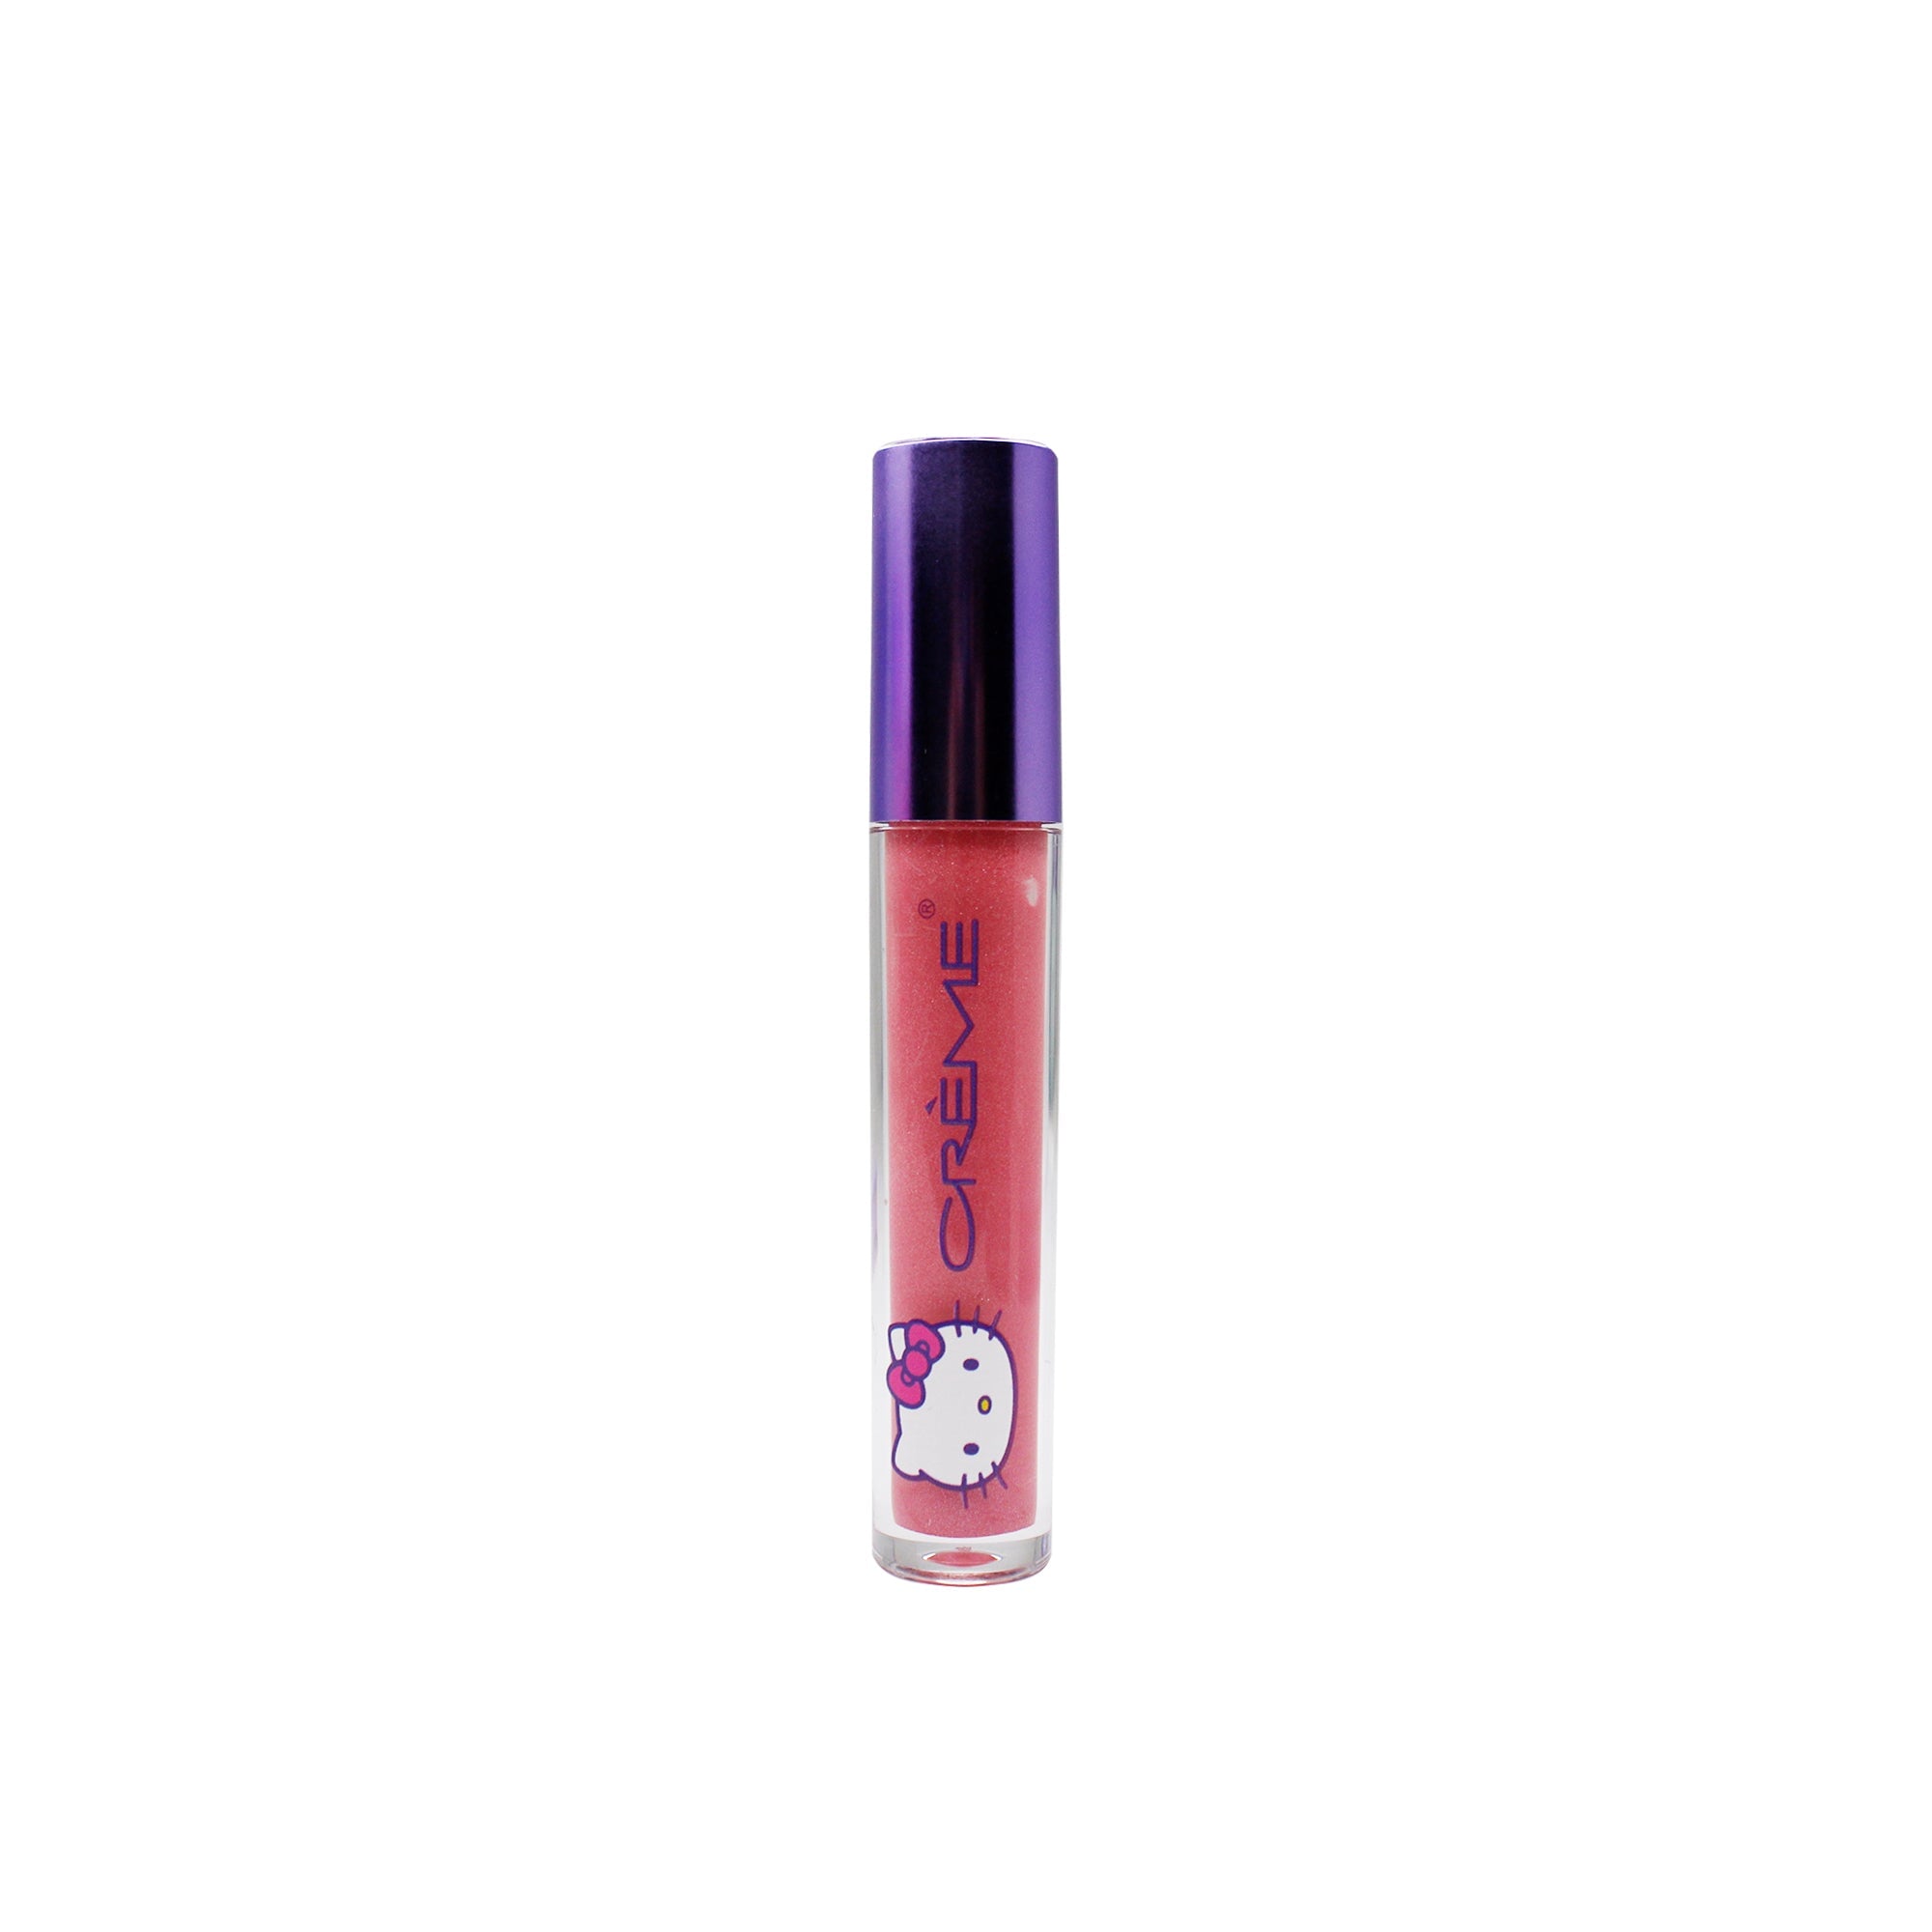 The Crème Shop x Hello Kitty(Purple) Jelly Glaze - Lovely Apple Lip Gloss The Crème Shop x Sanrio 